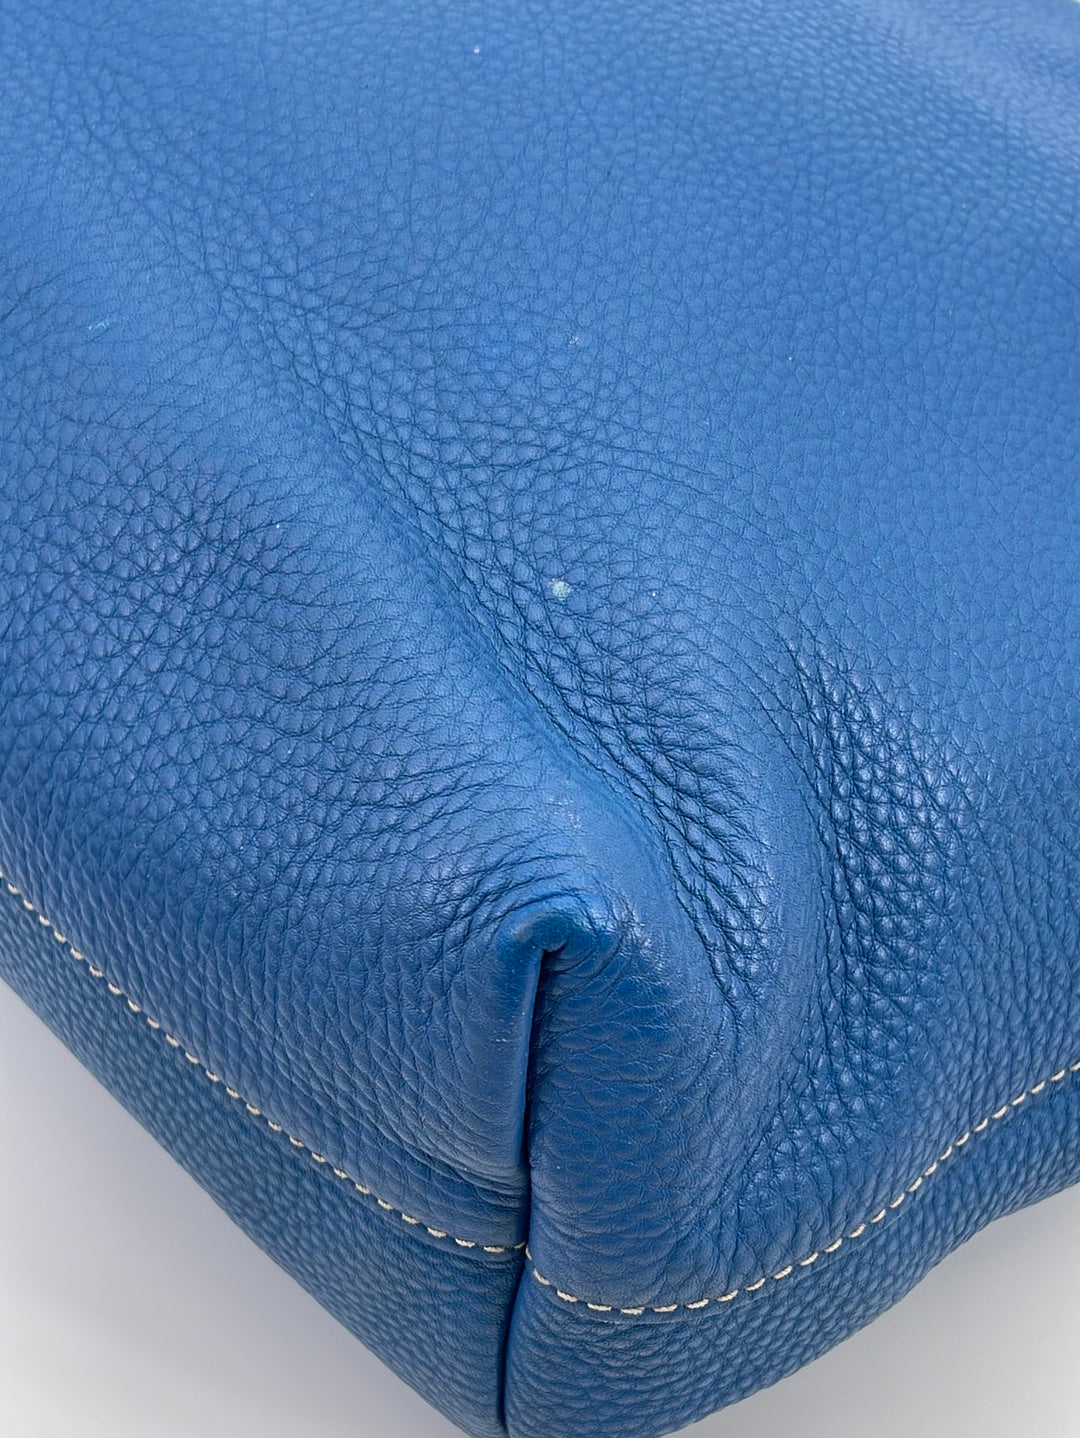 Prada Saffiano Leather Crossbody $2900 OBO